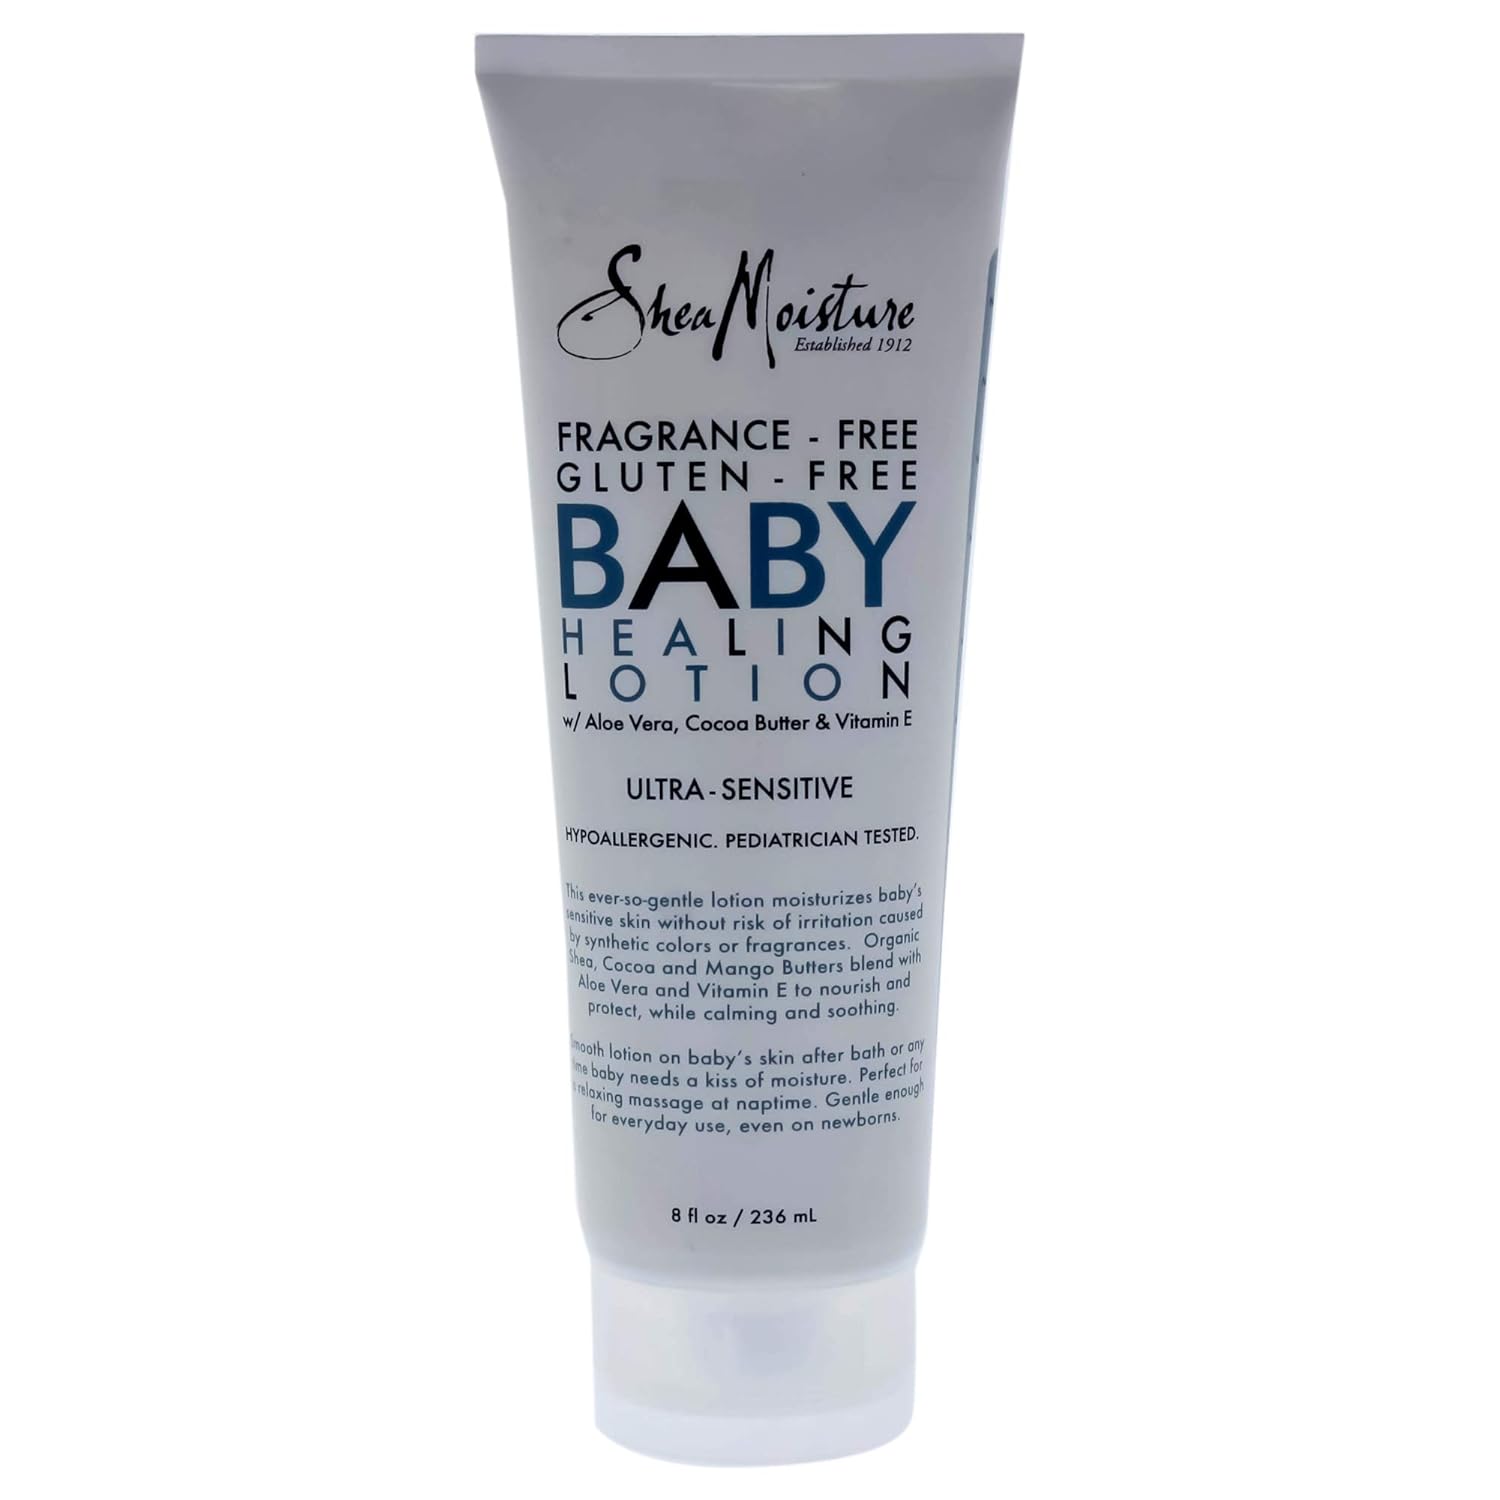 SheaMoisture Ultra-Sensitive Fragrance Gluten-Free and Tear-Free Healing Lotion, 8 oz : Baby